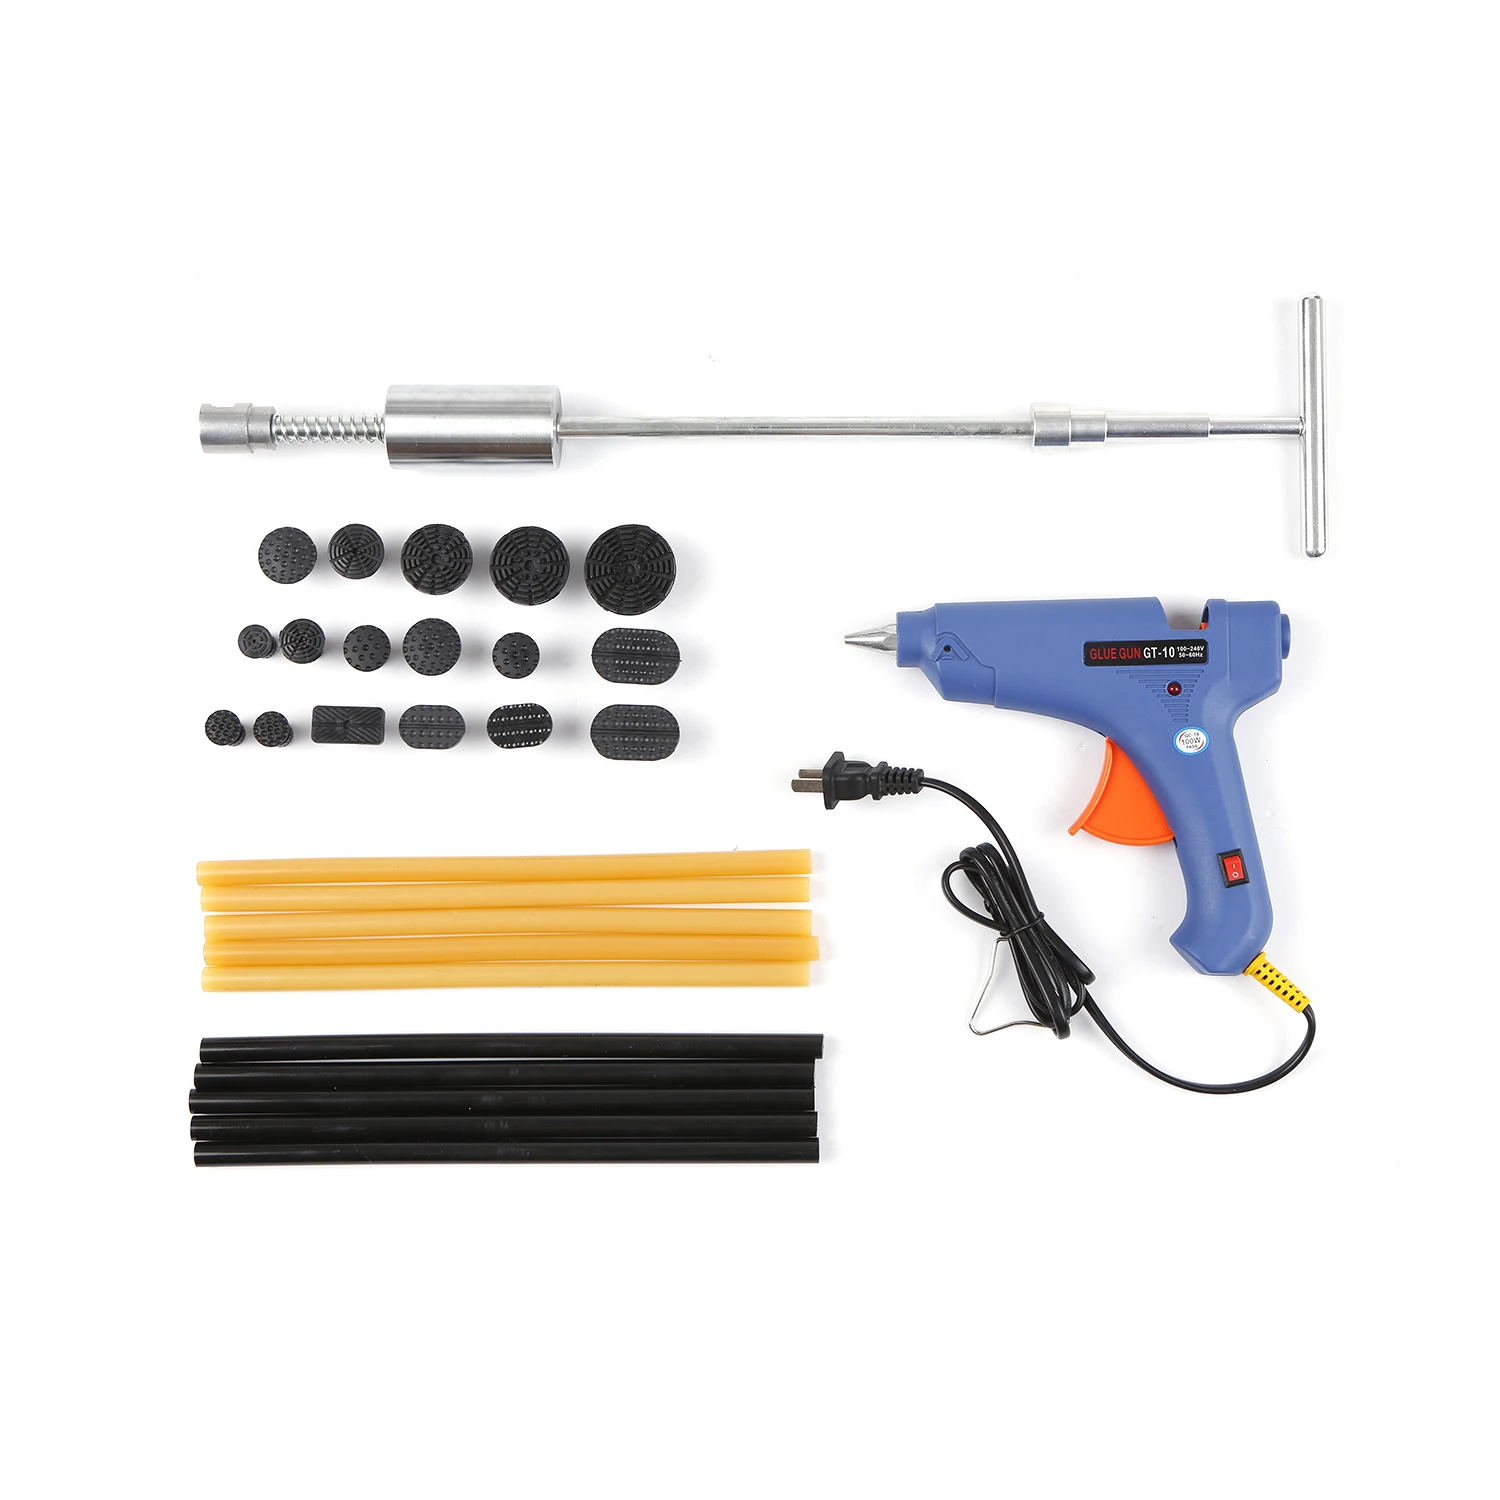 

Paintless Dent Repair Puller Kit Dent Puller Slide Hammer T-Bar Tool with 17pcs Dent Removal Pulling Tabs Car Dent Repair Tool